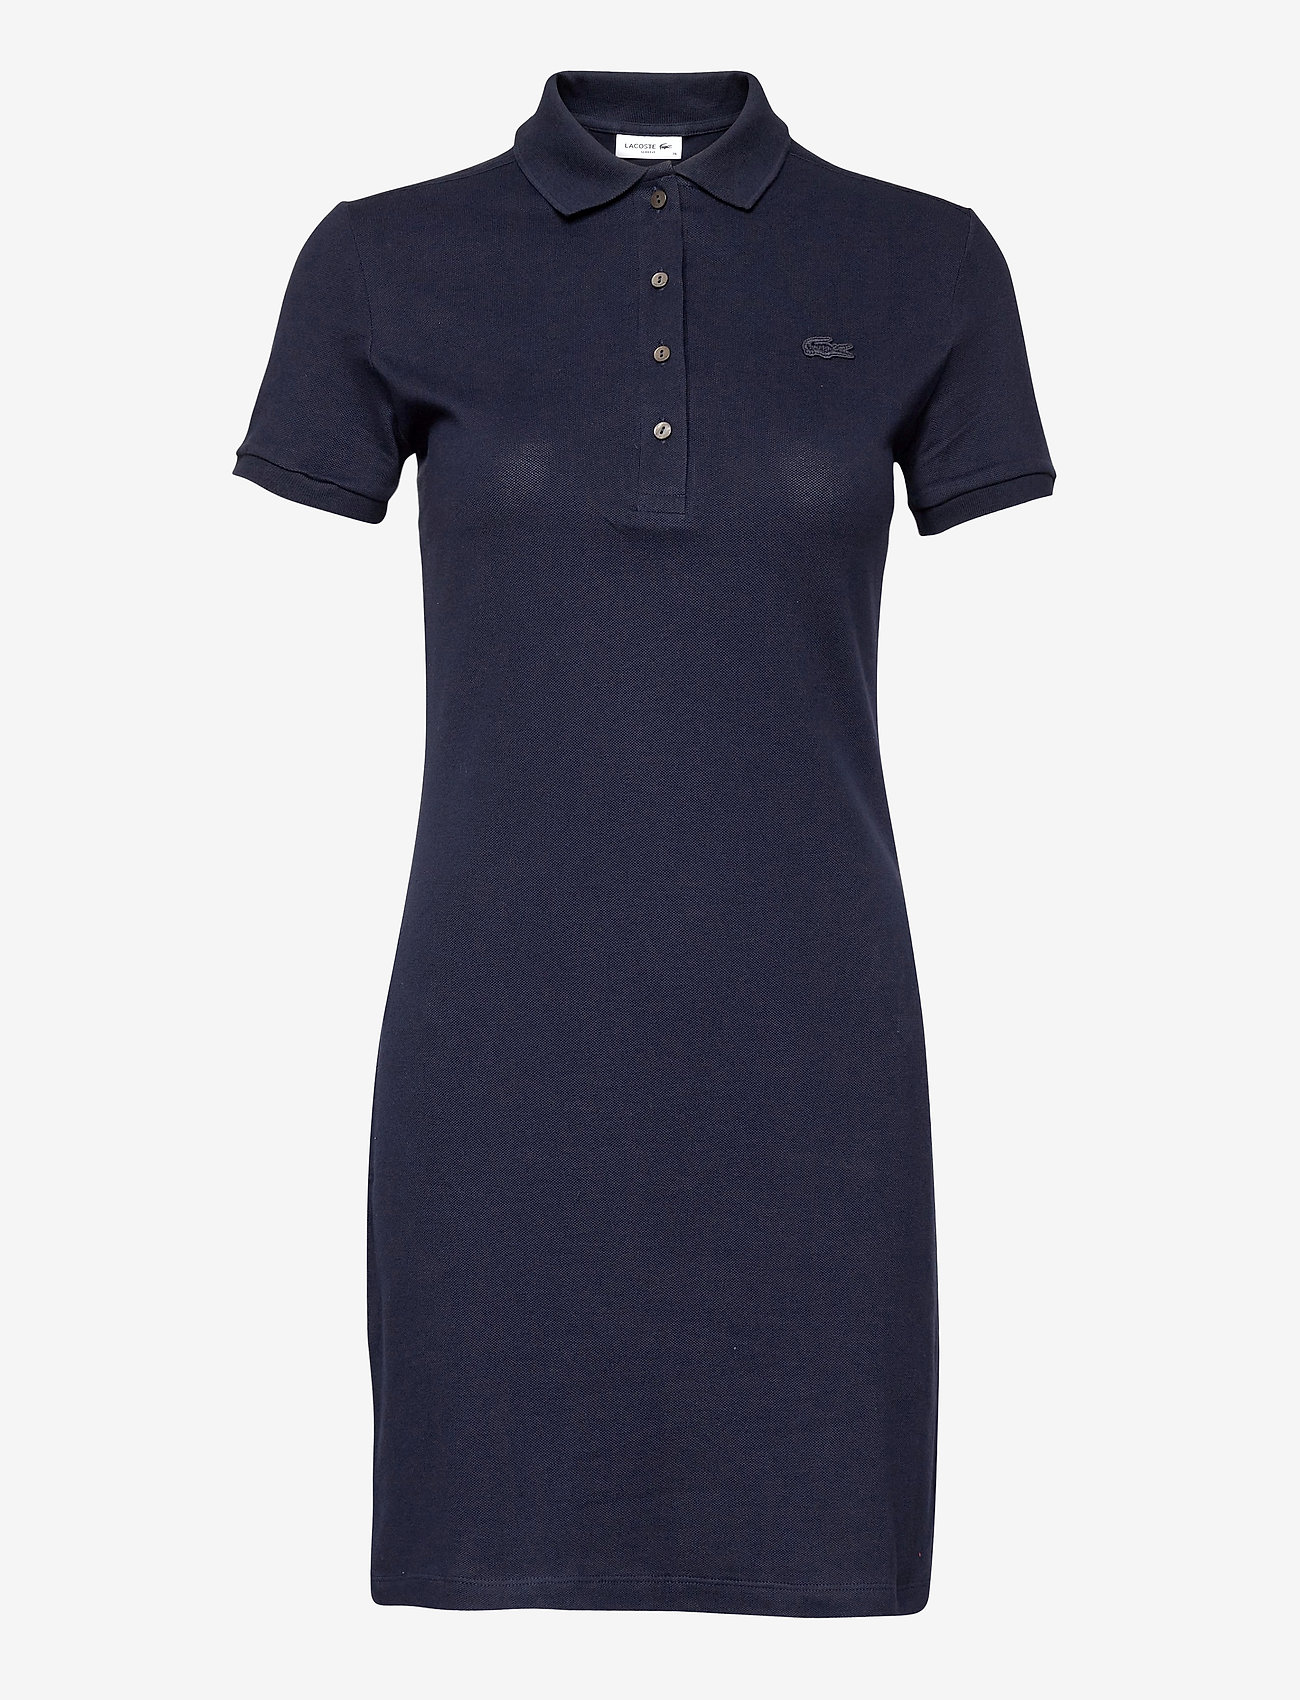 Lacoste - Women s dress - summer dresses - navy blue - 0